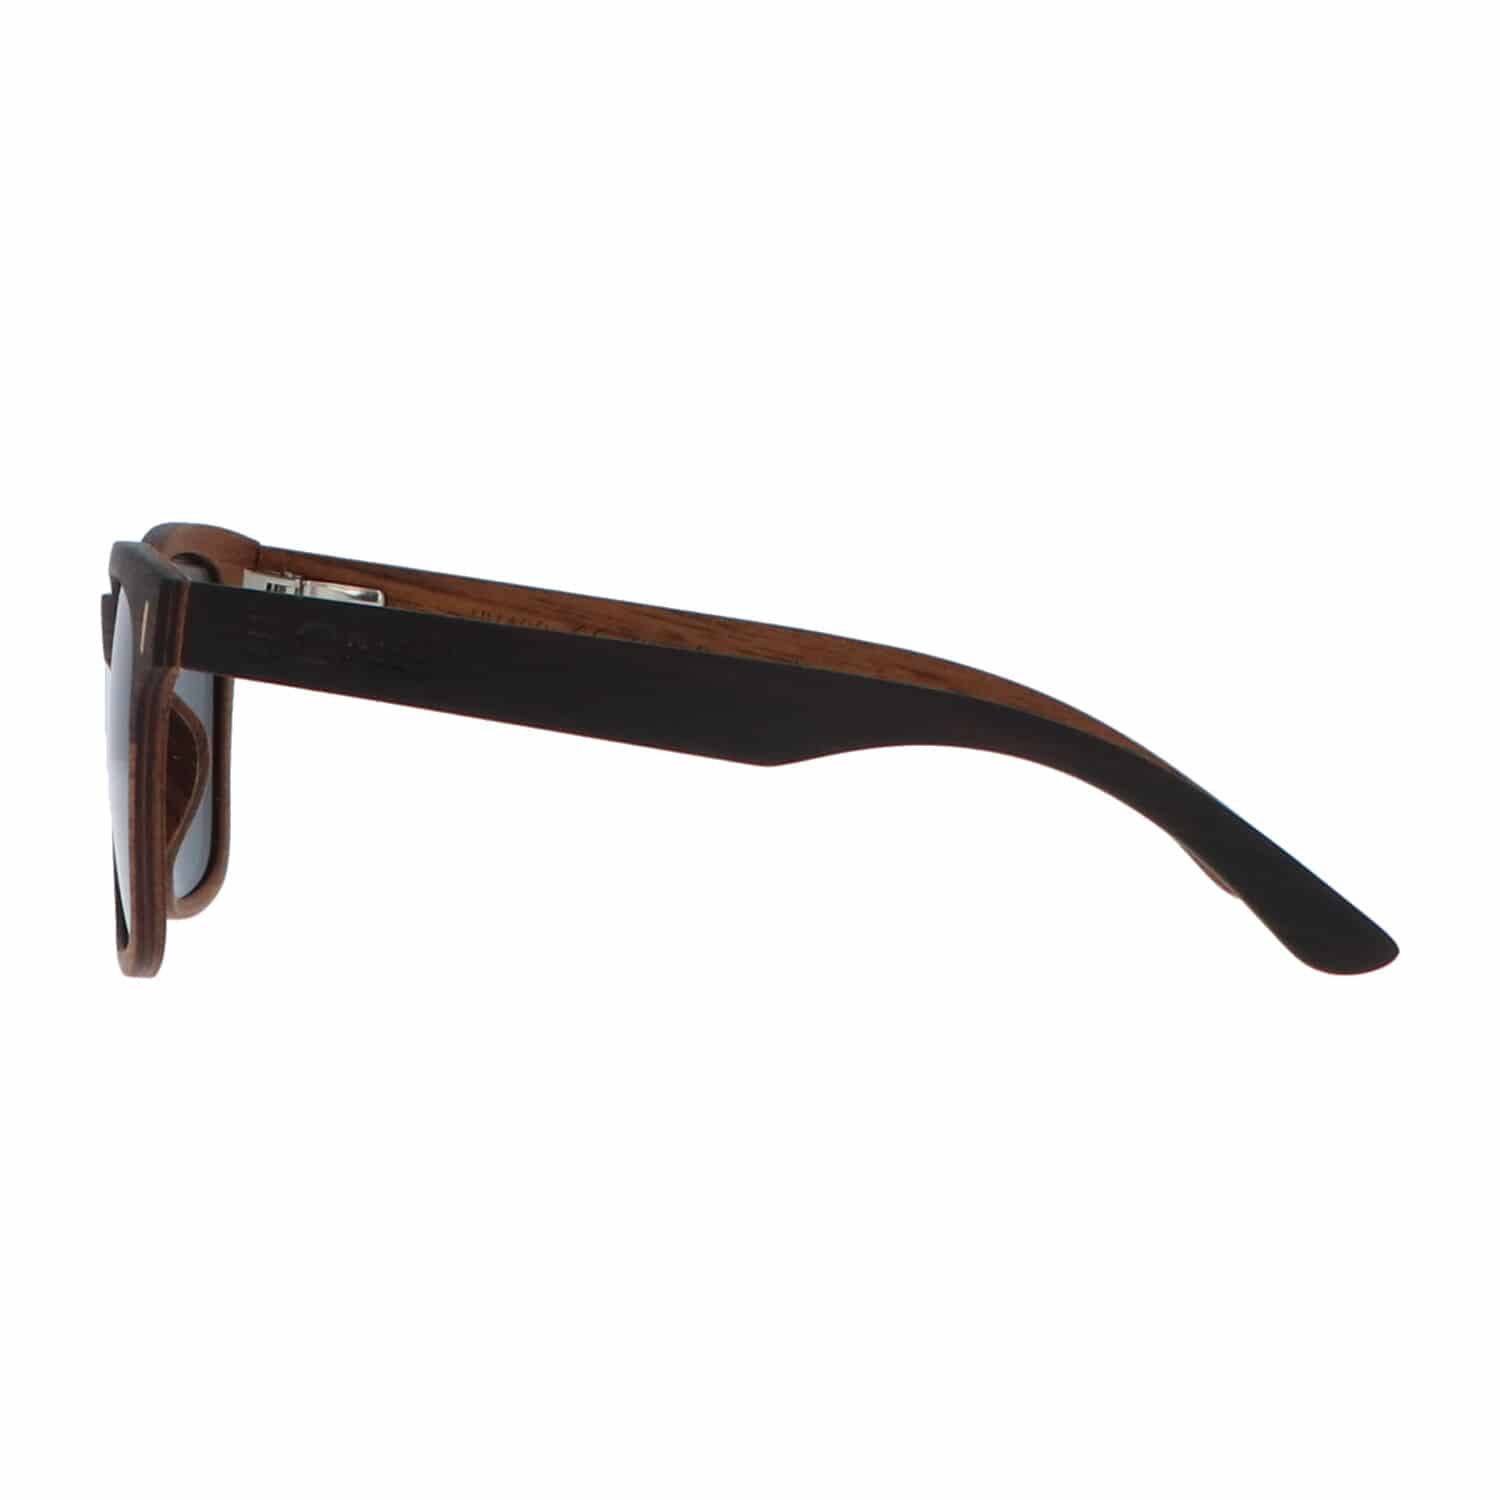 5one® Slim Line Ebony 2-tone - Ebben hout Wayfarer zonnebril - grijs